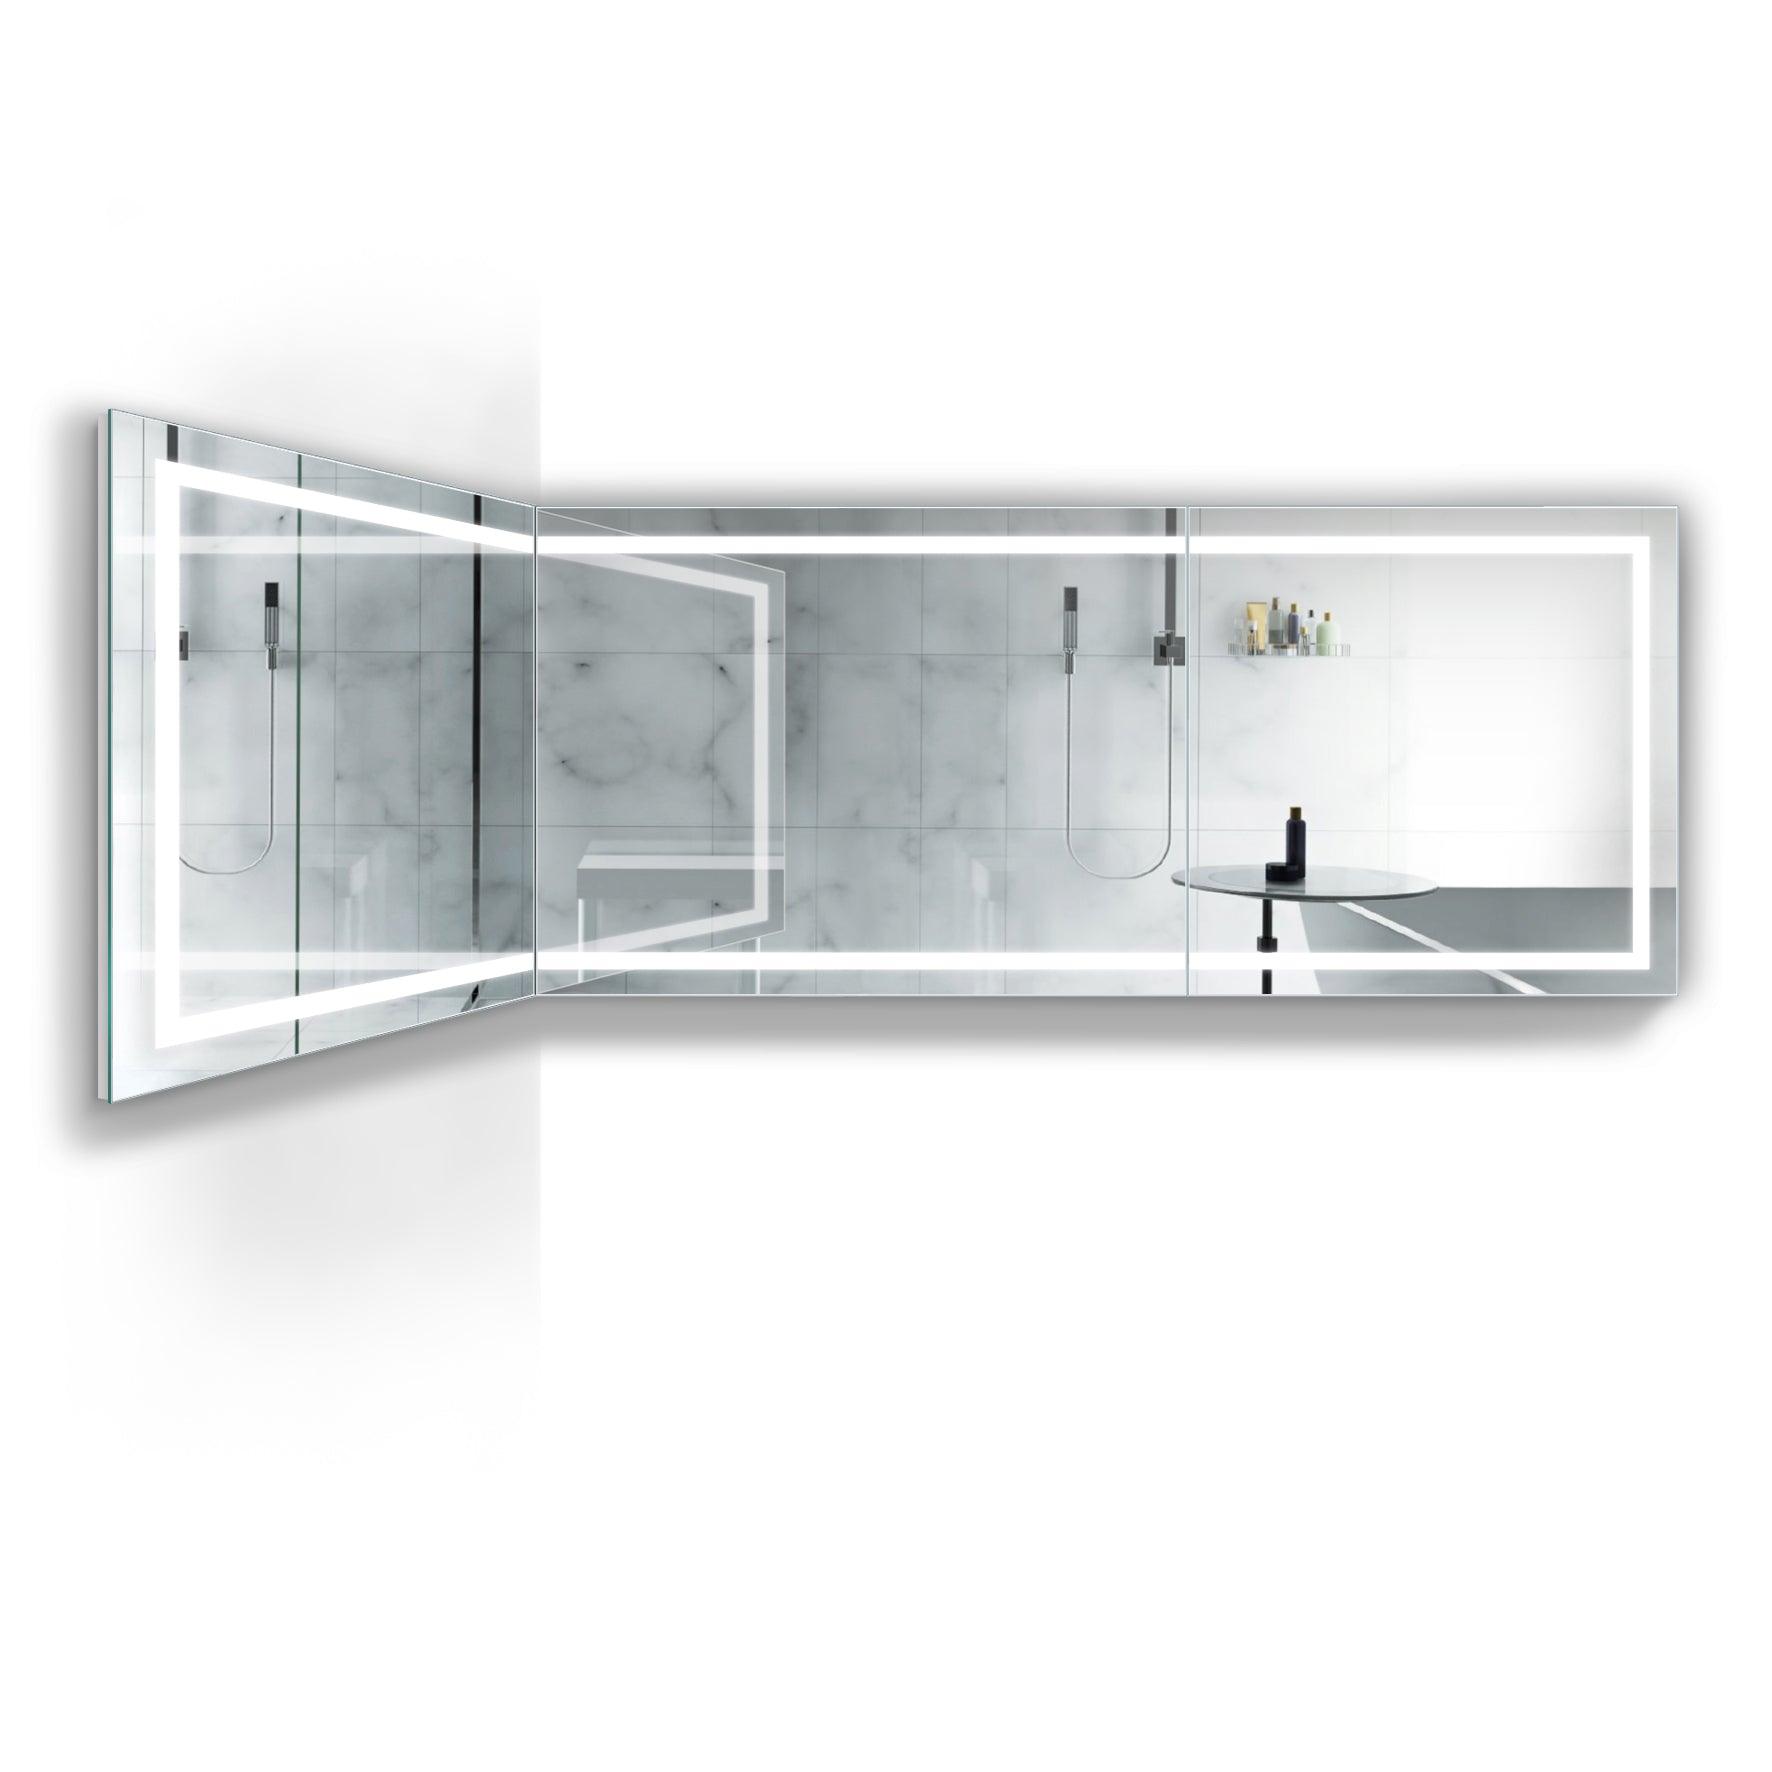 Krugg Mod SM Long 10 Modular Corner LED Bathroom Mirror